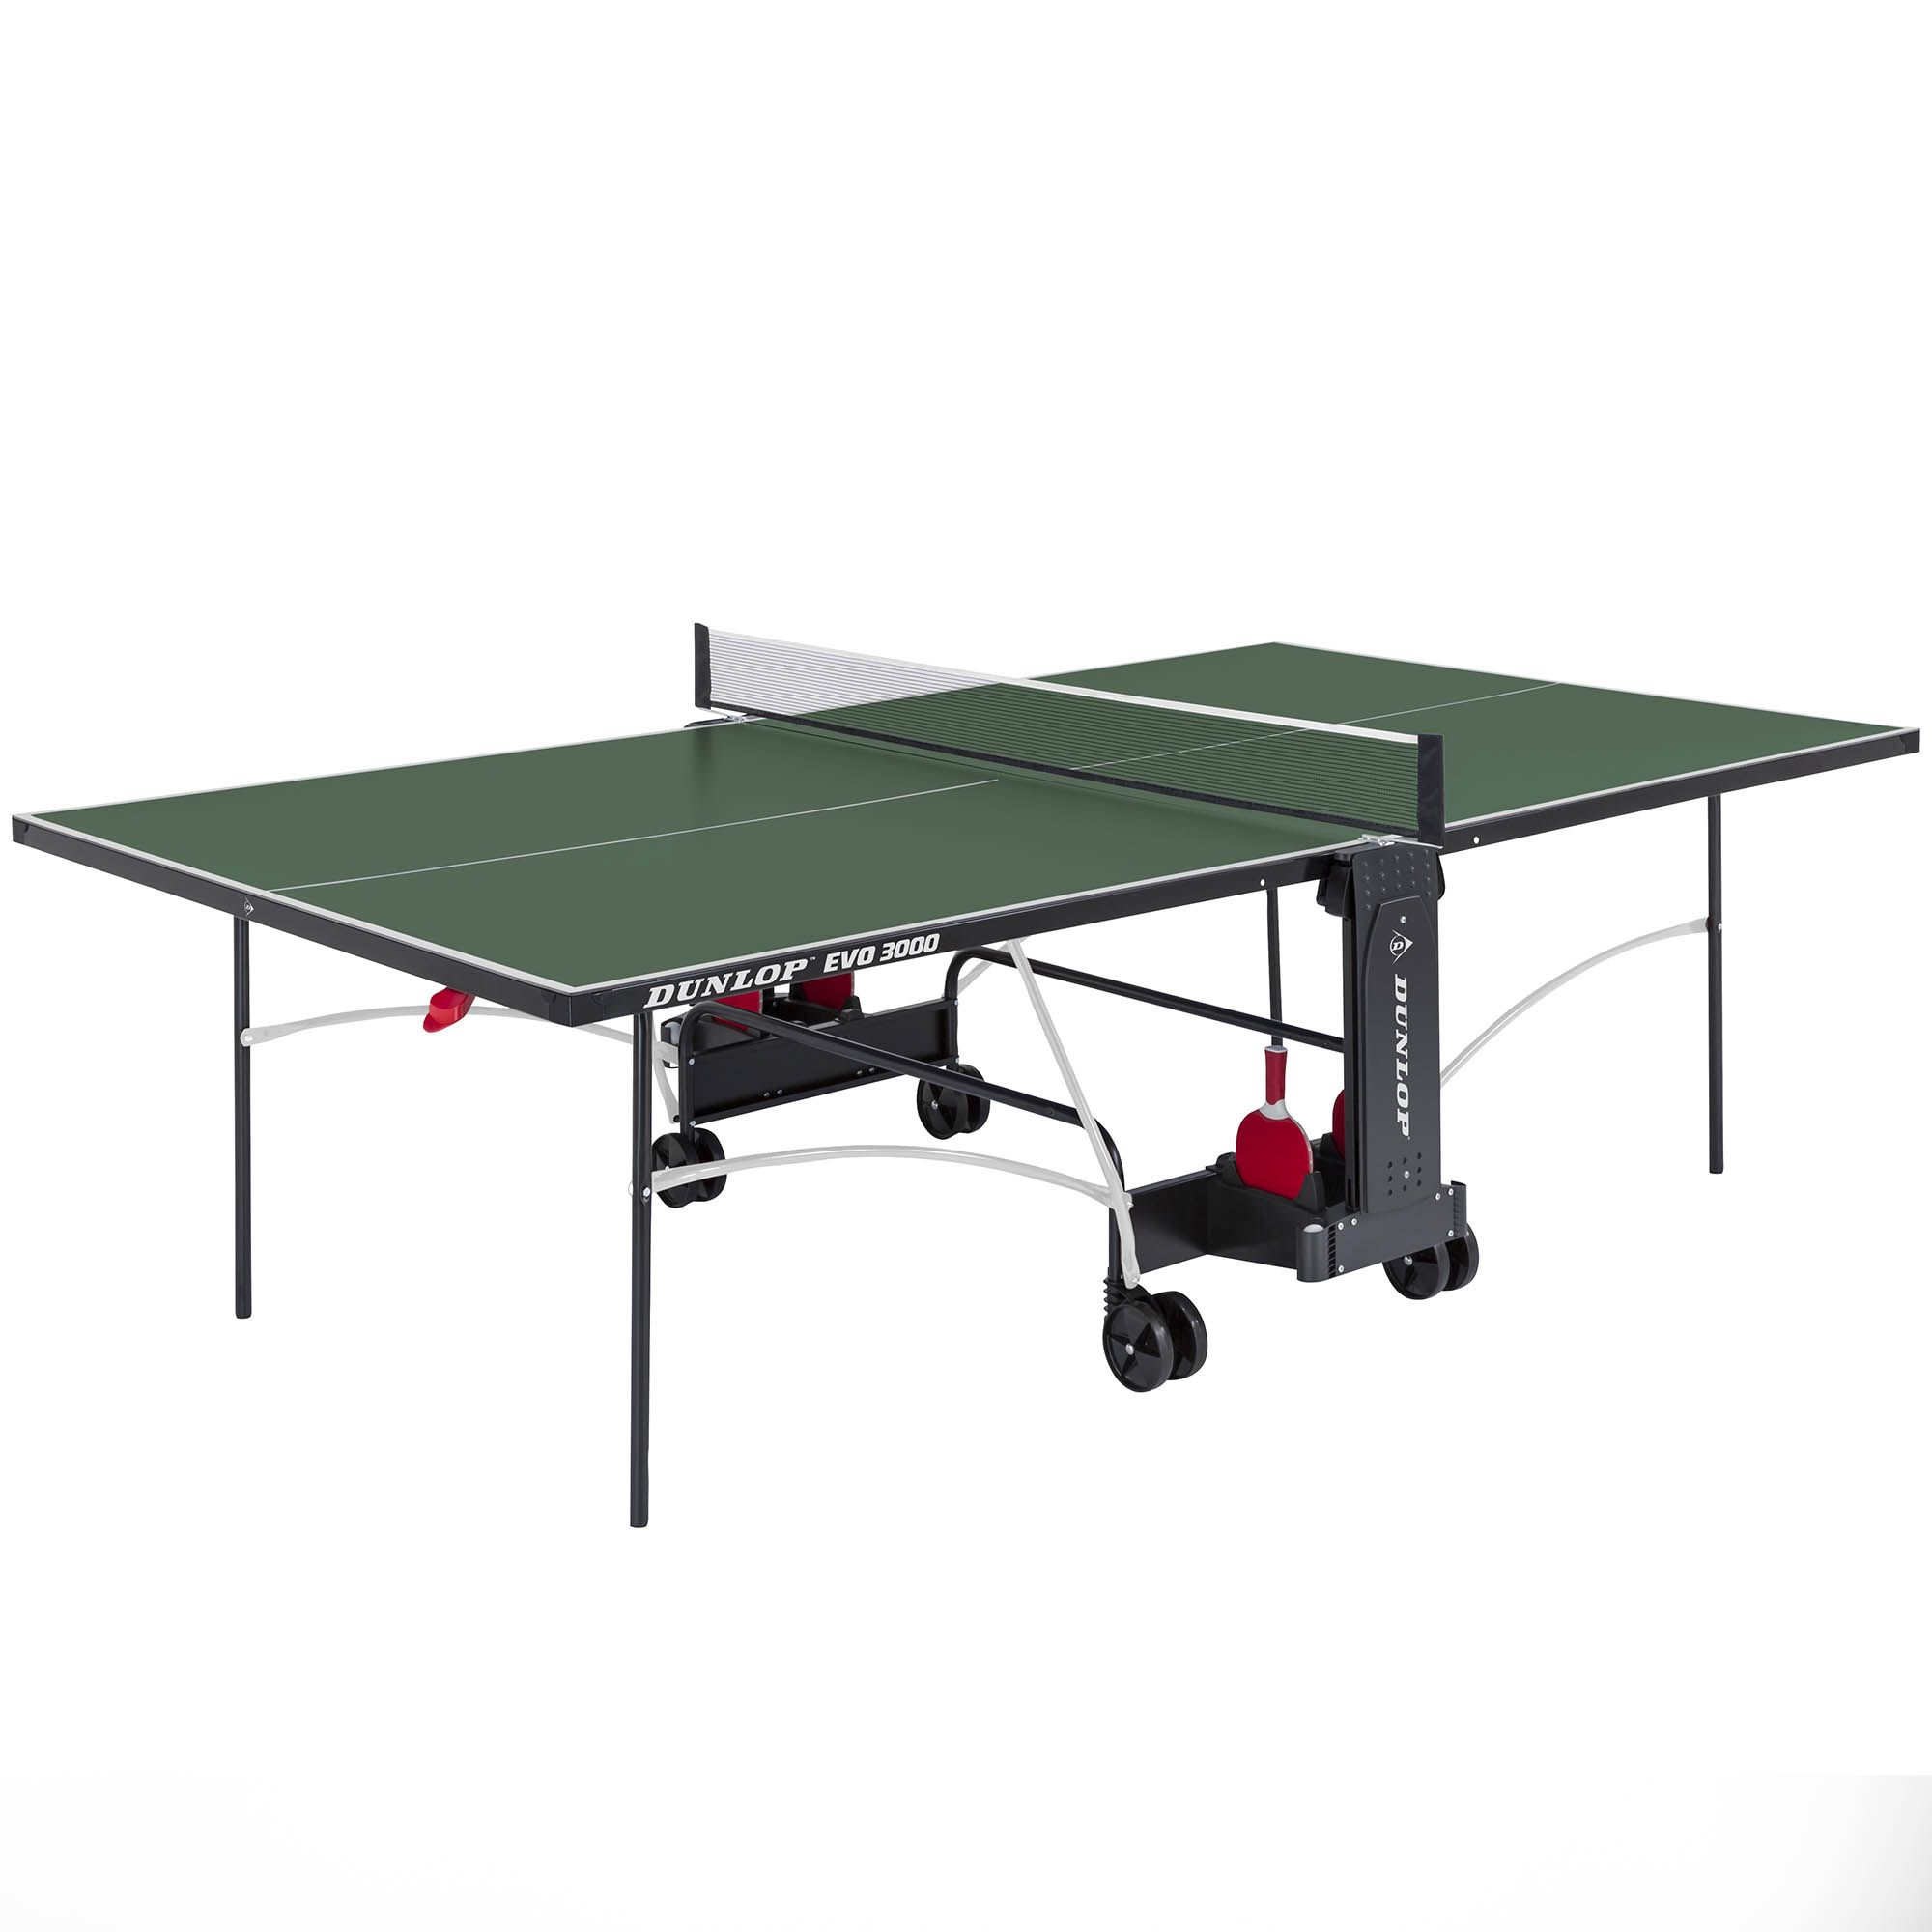 Dunlop Evo 3000 Outdoor Table Tennis Table